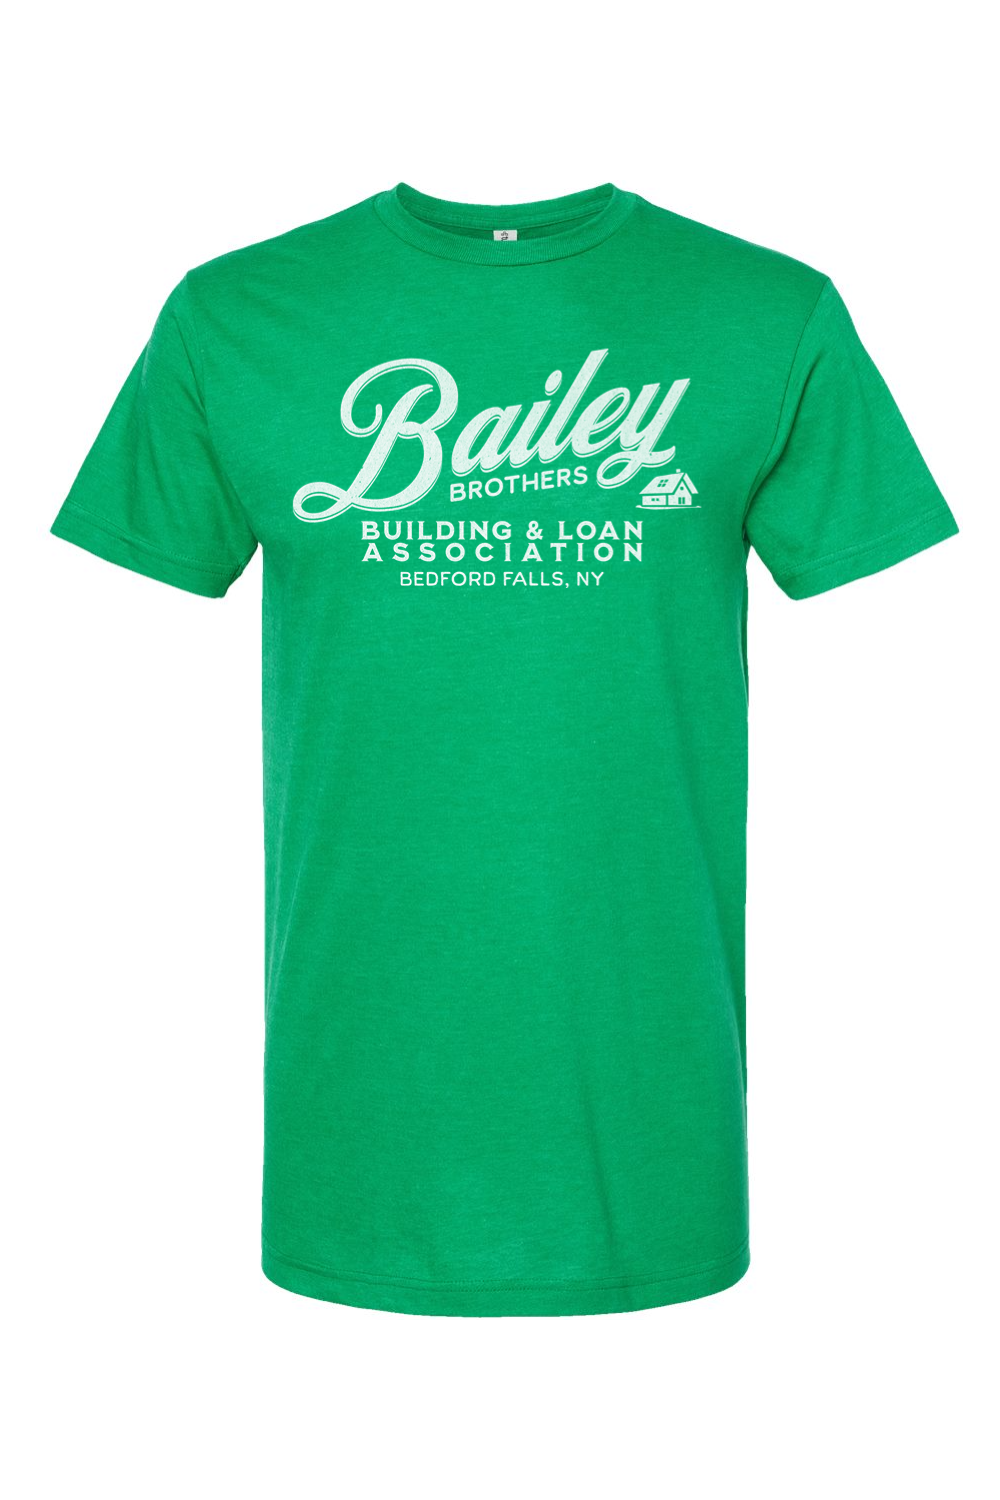 Bailey Brothers Building & Loan Association - Yinzylvania